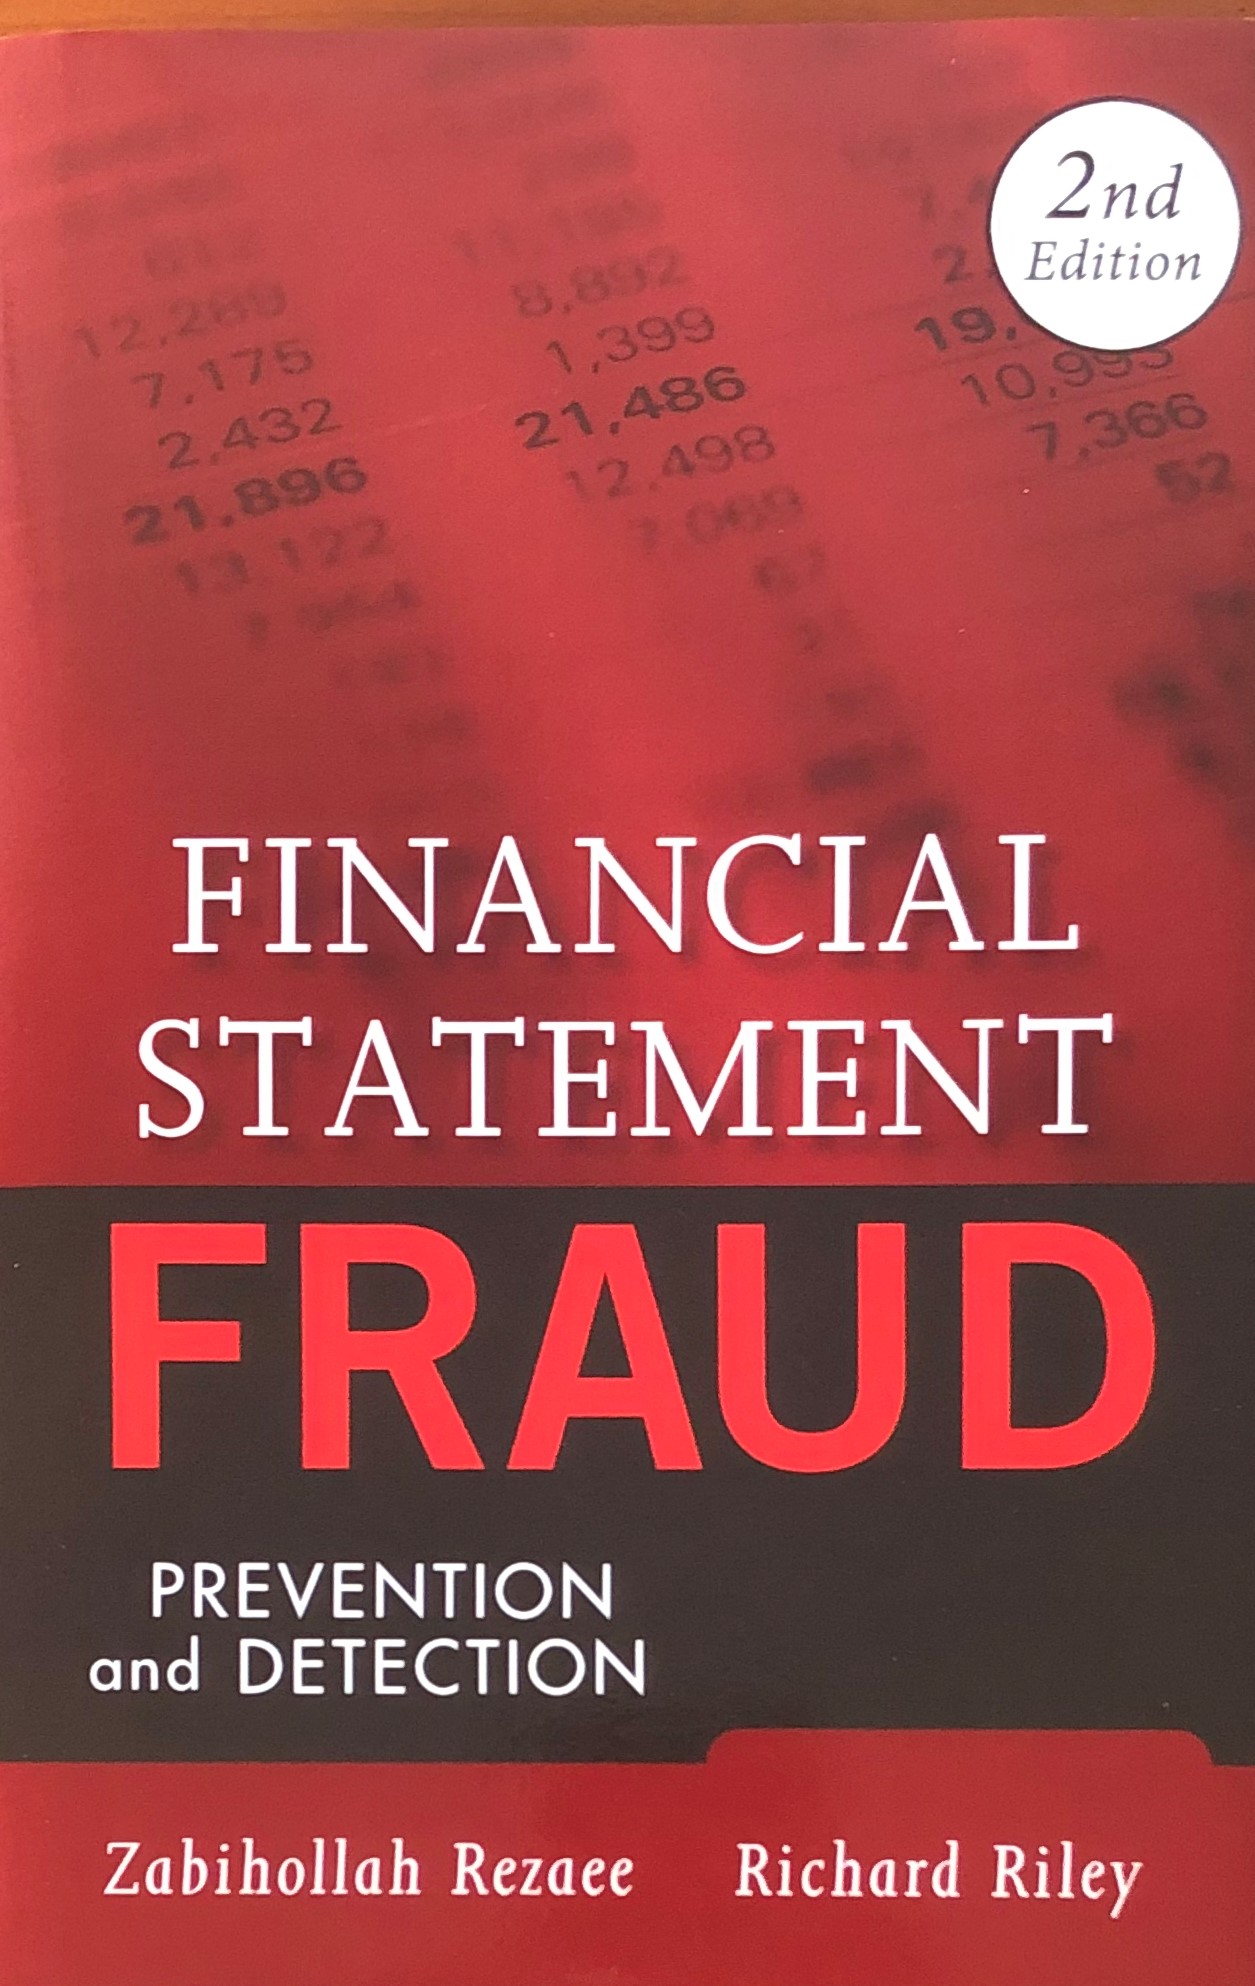 Description Financial Statement Fraud: Prevention and Detection